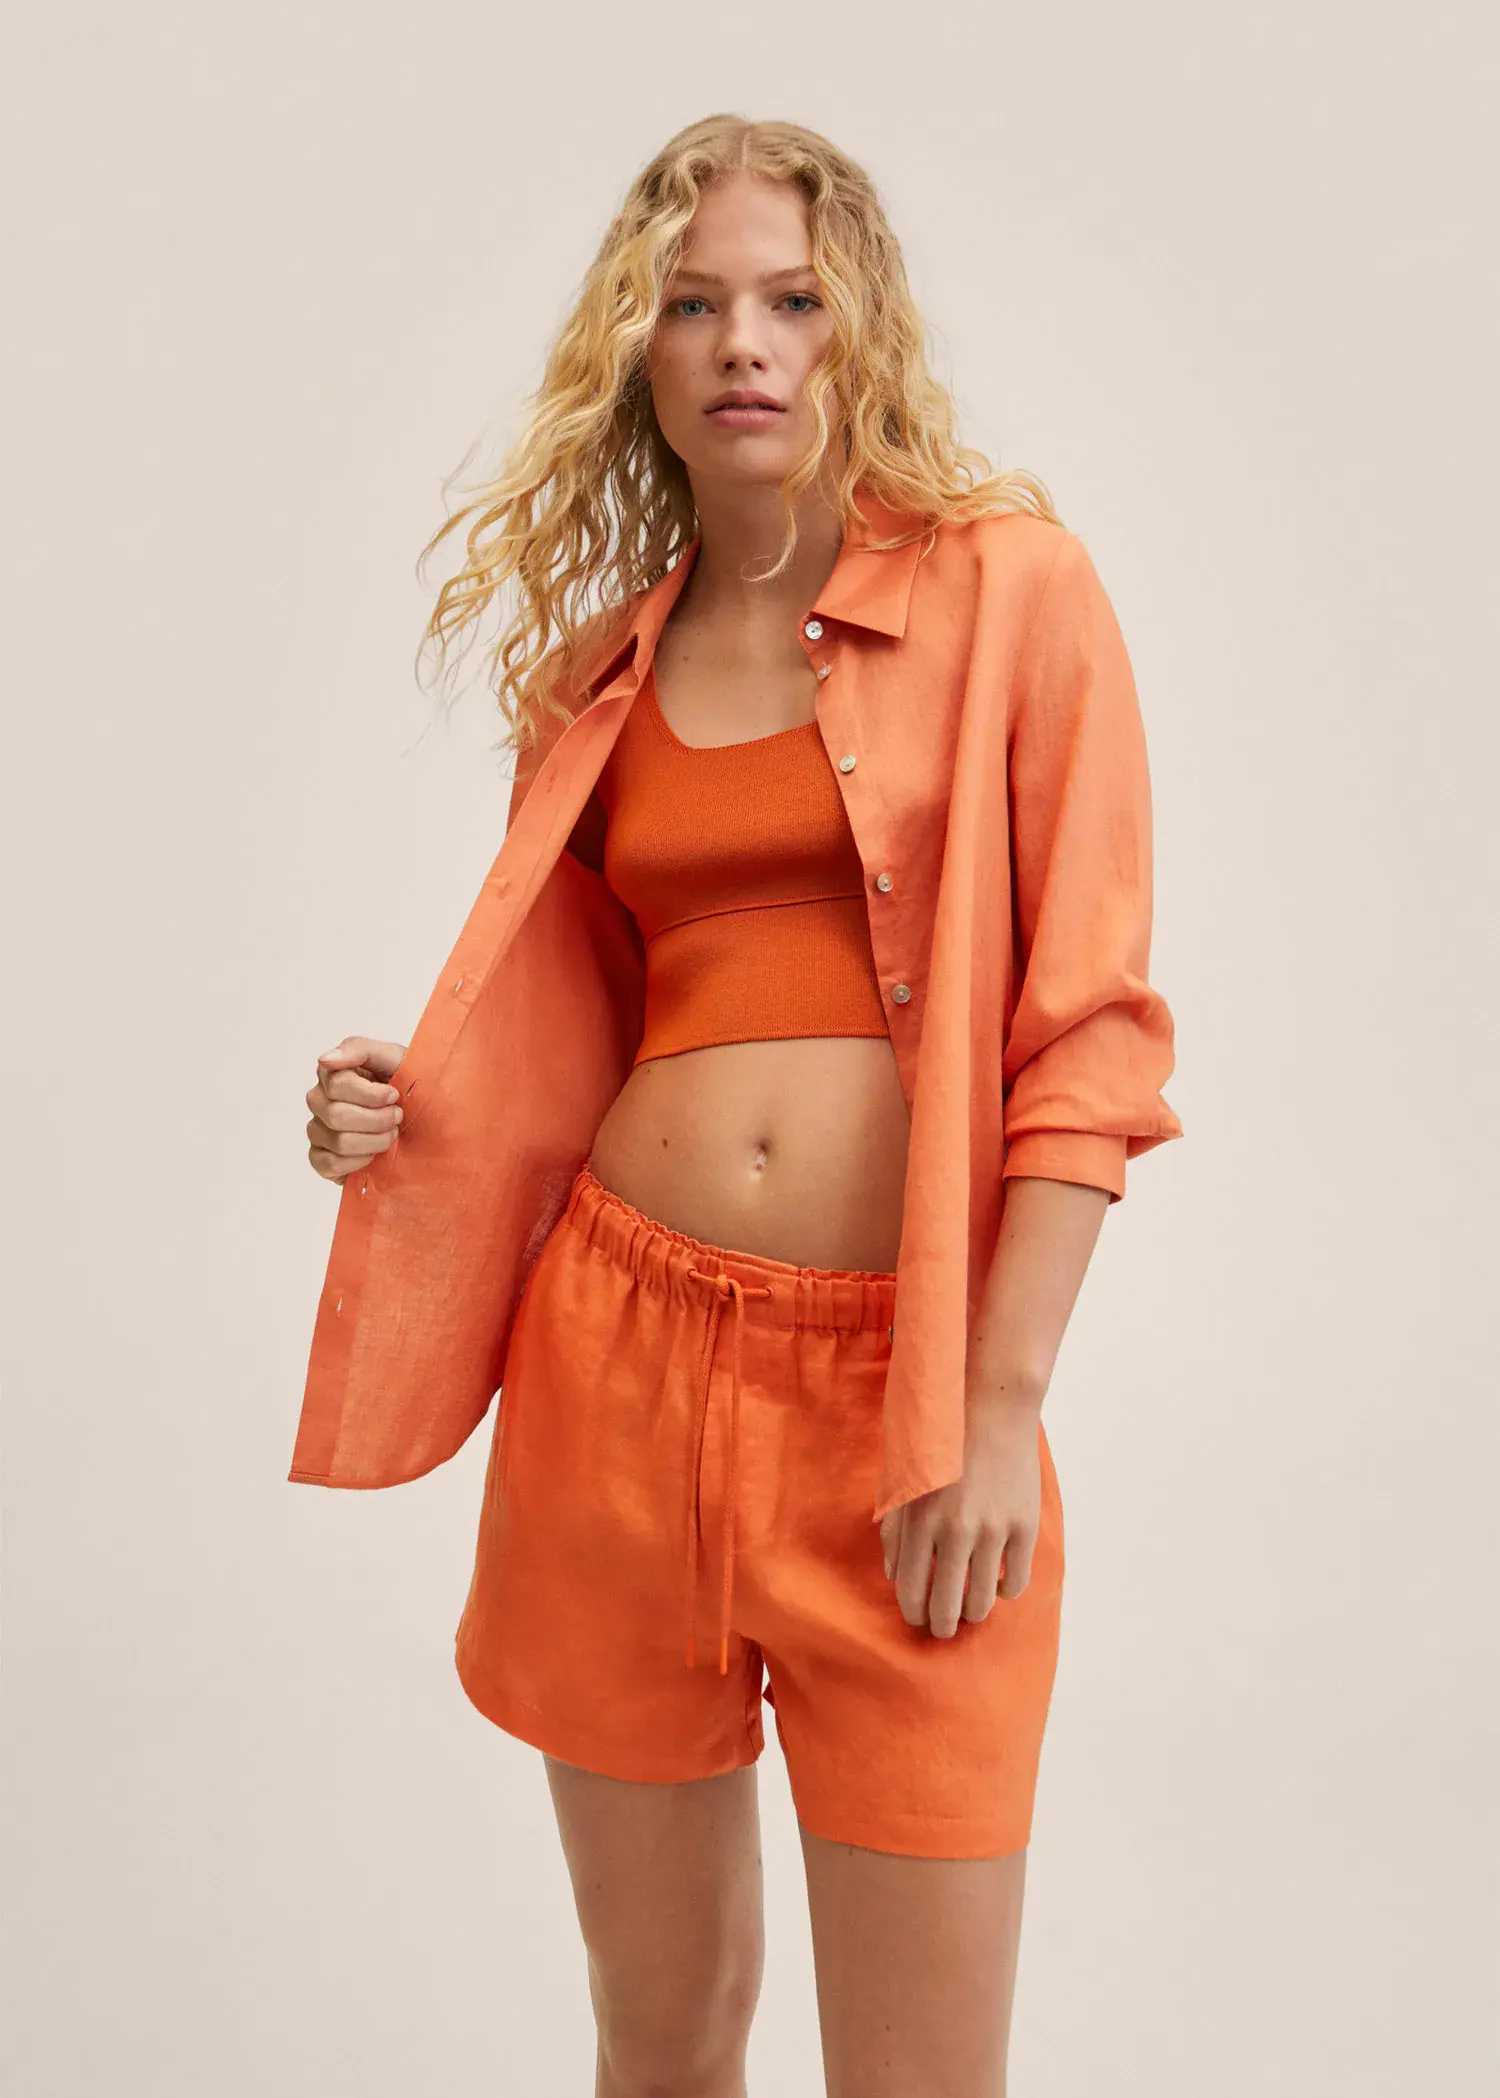 Mango 100% linen shorts. a woman in orange shorts and a orange shirt. 